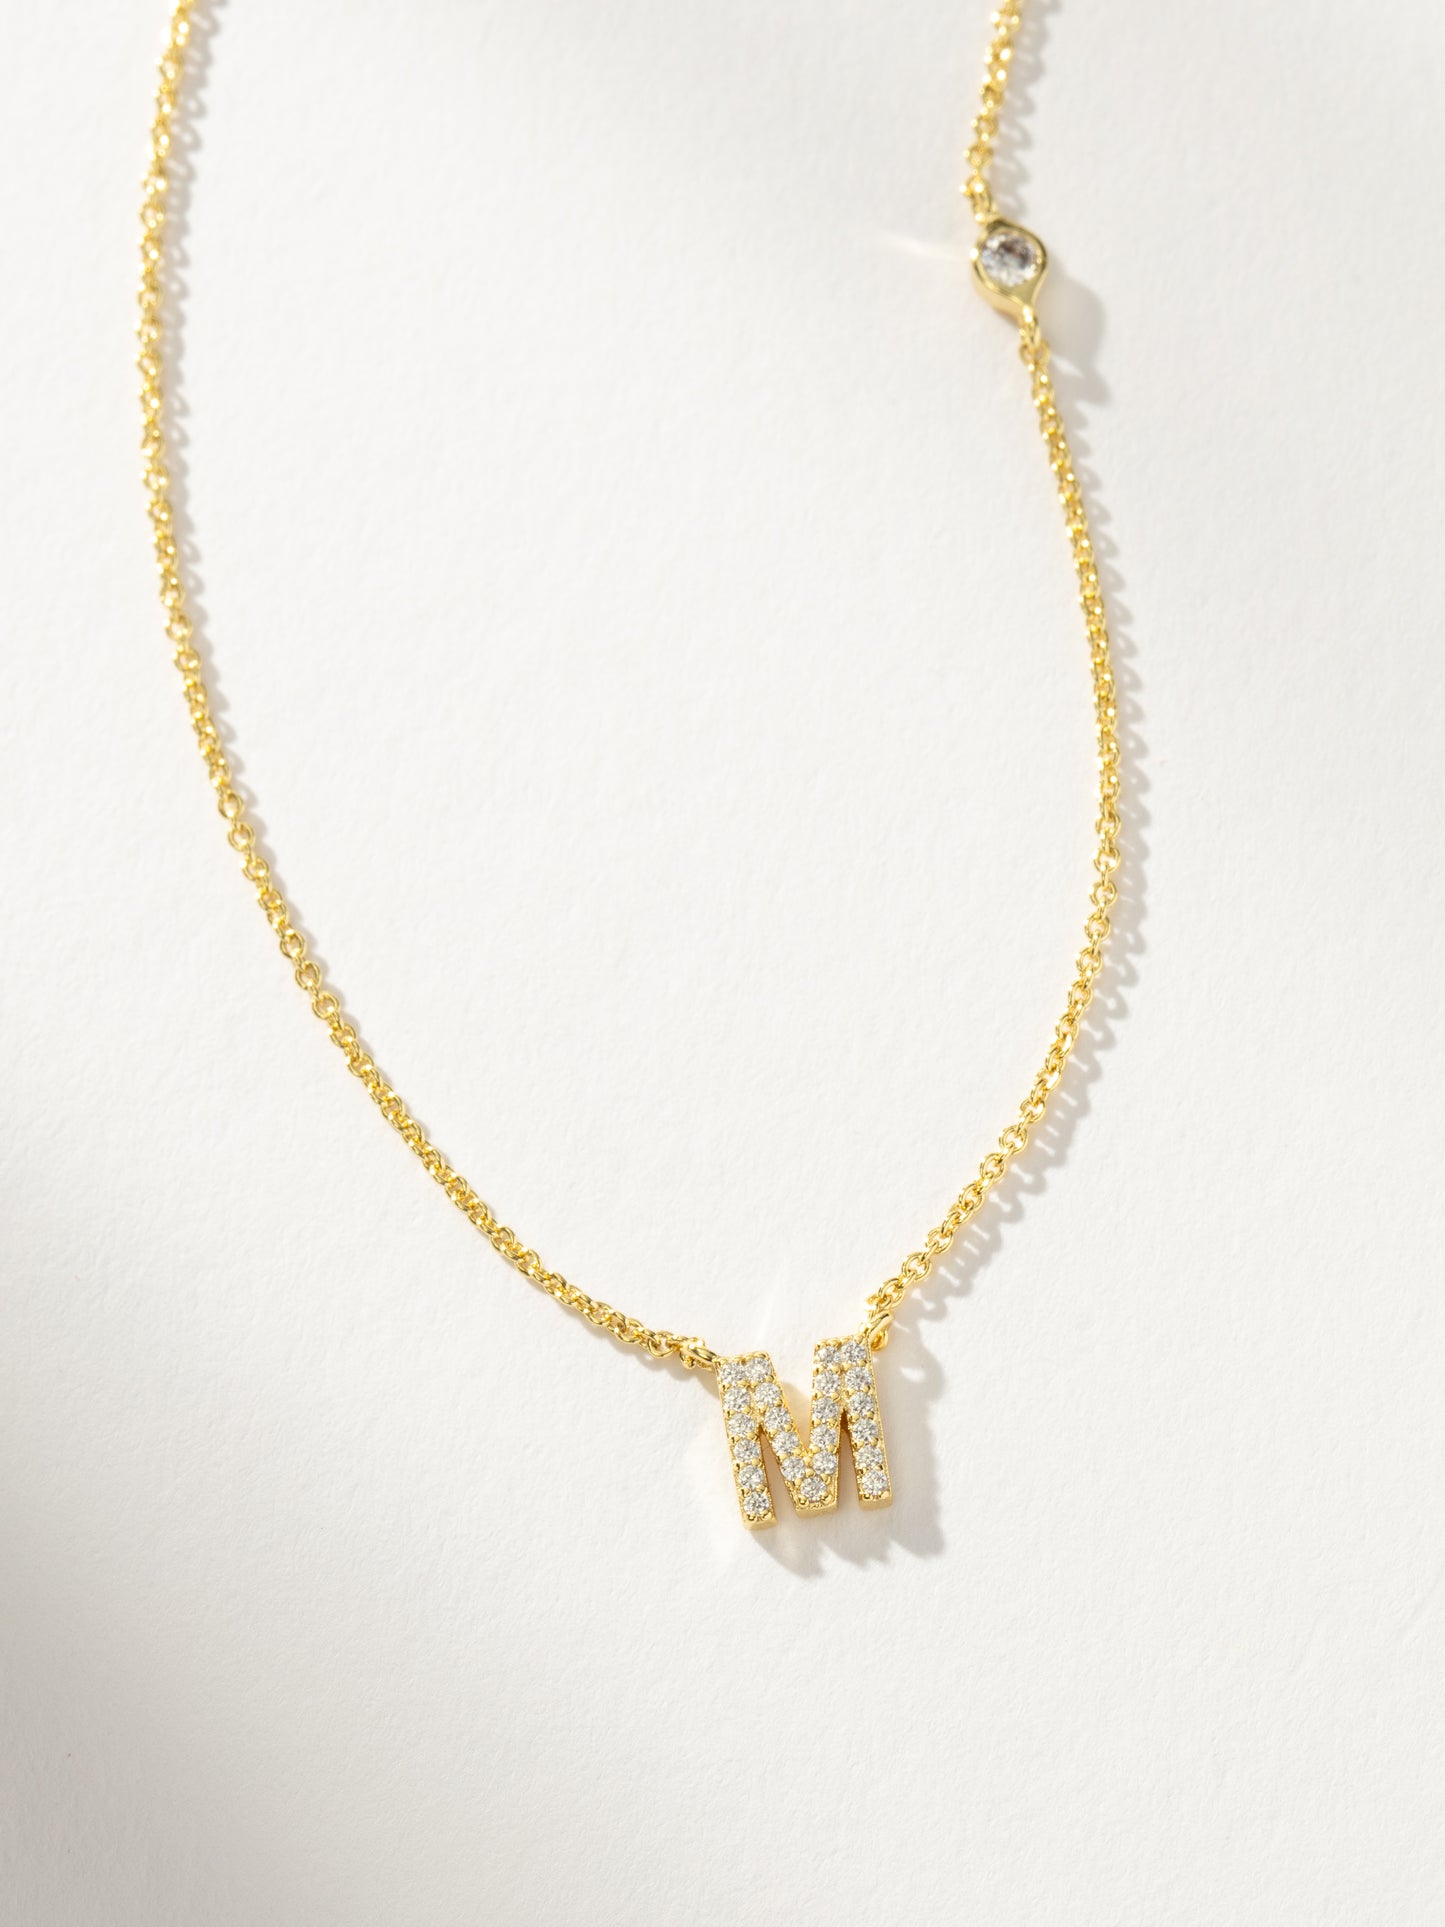 Pavé Initial Necklace | Gold M | Product Detail Image | Uncommon James